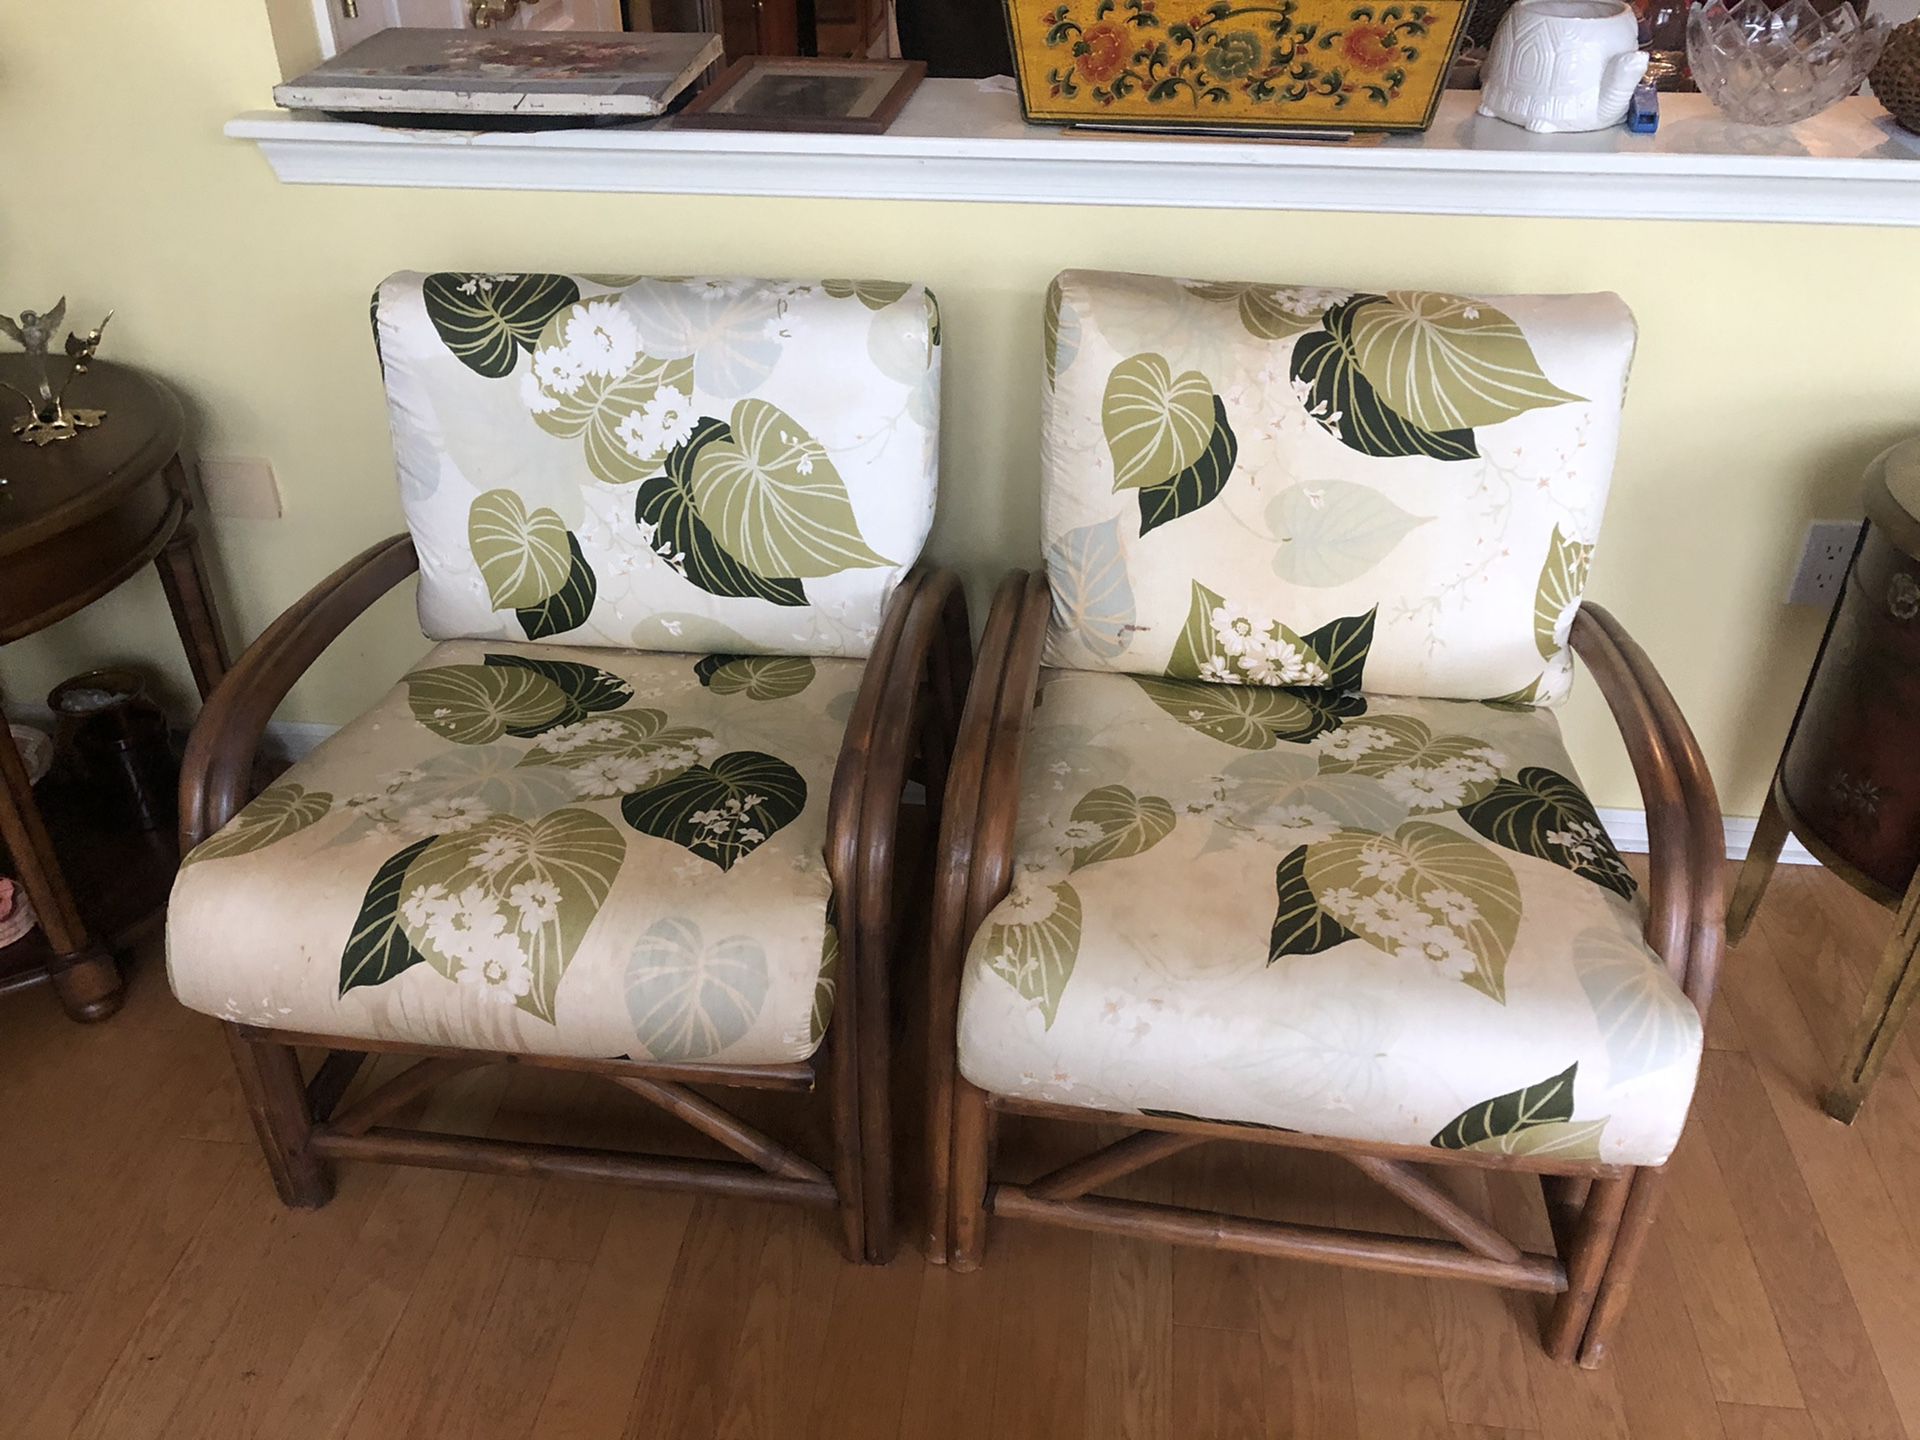 2 Bamboo chairs